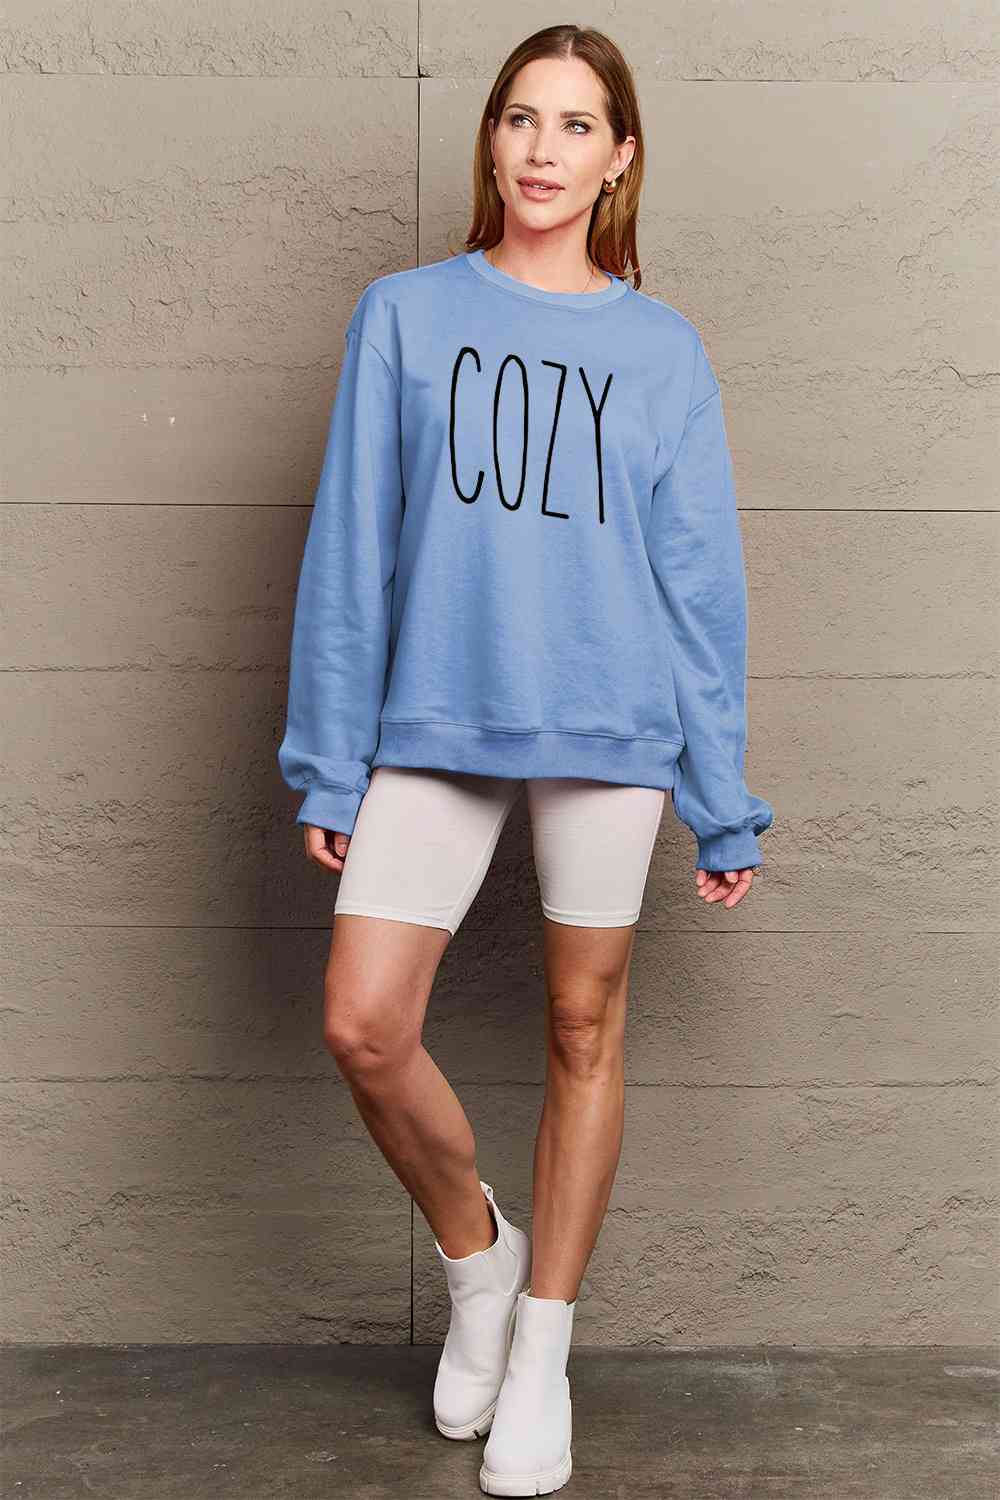 Simply Love Full Size COZY Graphic Sweatshirt